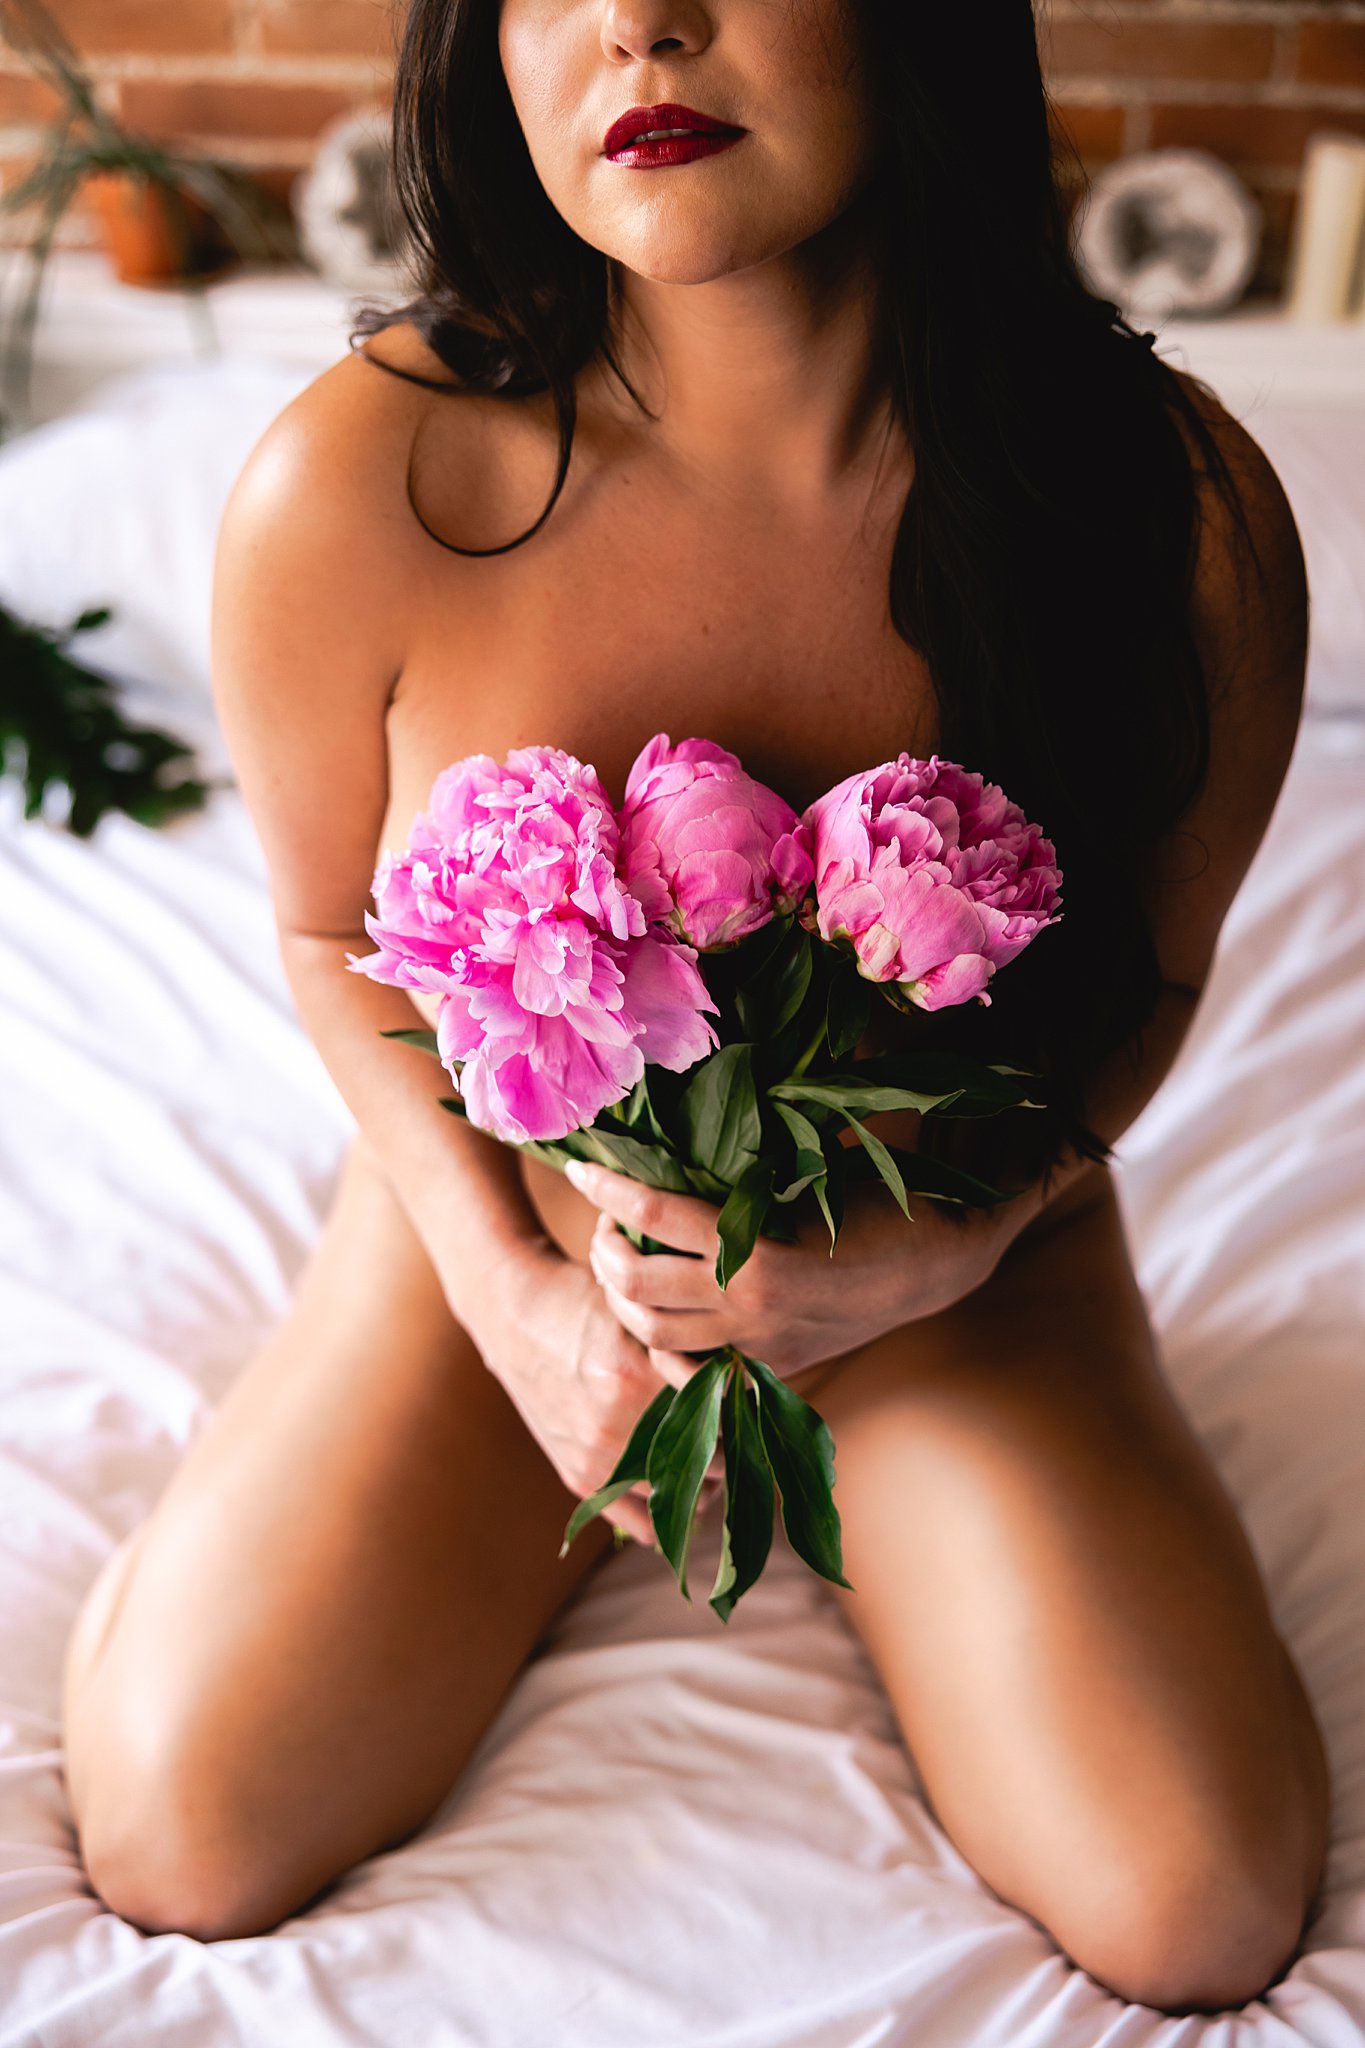 https://wmnkndboudoir.com/wp-content/uploads/2023/06/intimate_boudoir_photography_portraits_with_flowers_kansas_city_photographer_wmnknd2.jpg